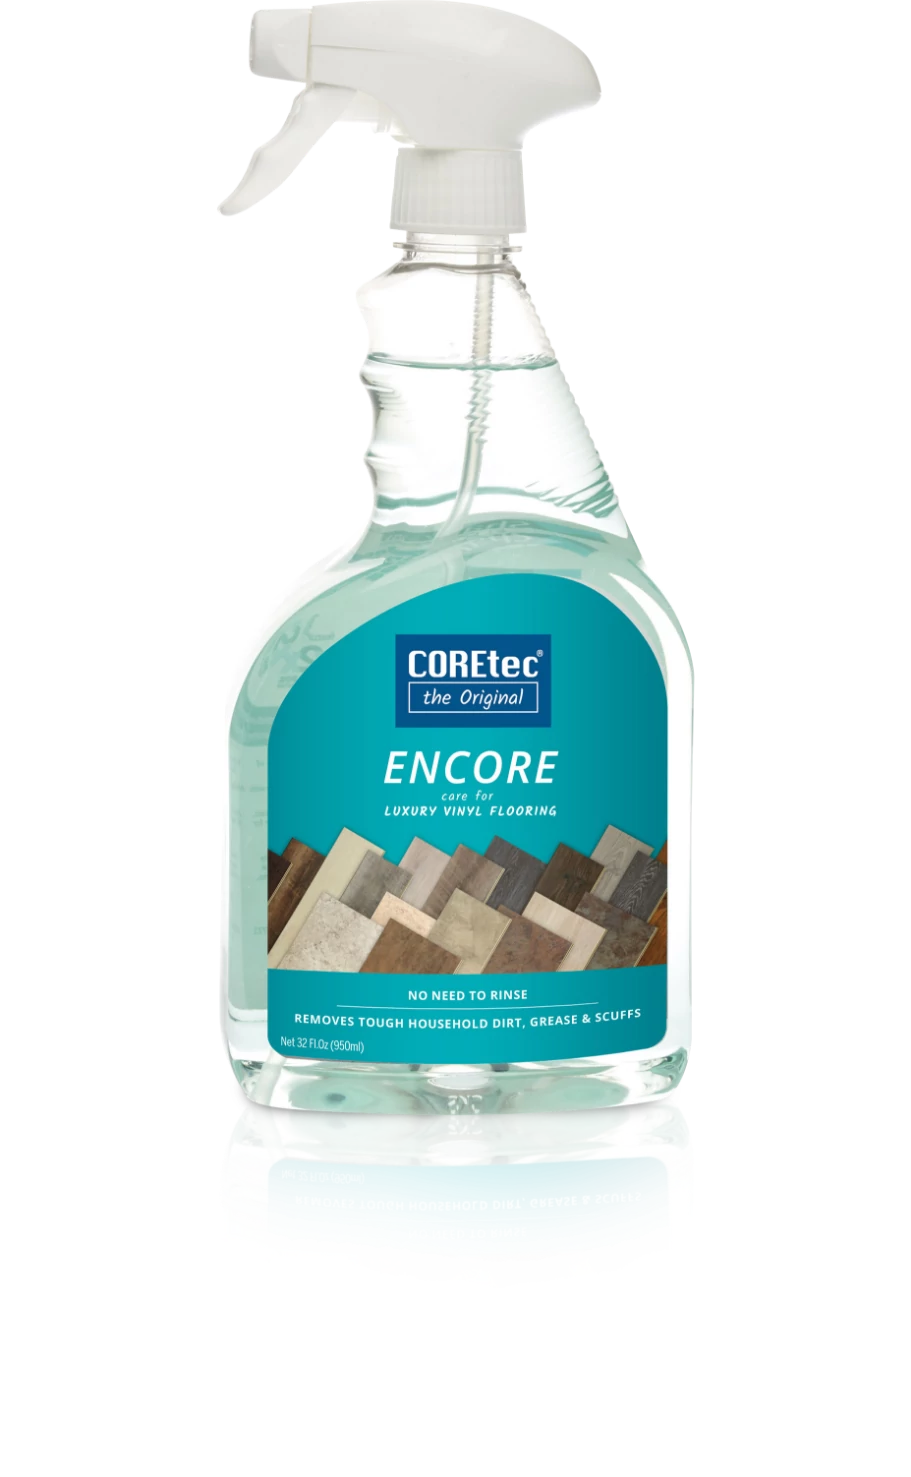 32oz bottle of COREtec’s Encore Luxury Vinyl Flooring Cleaner